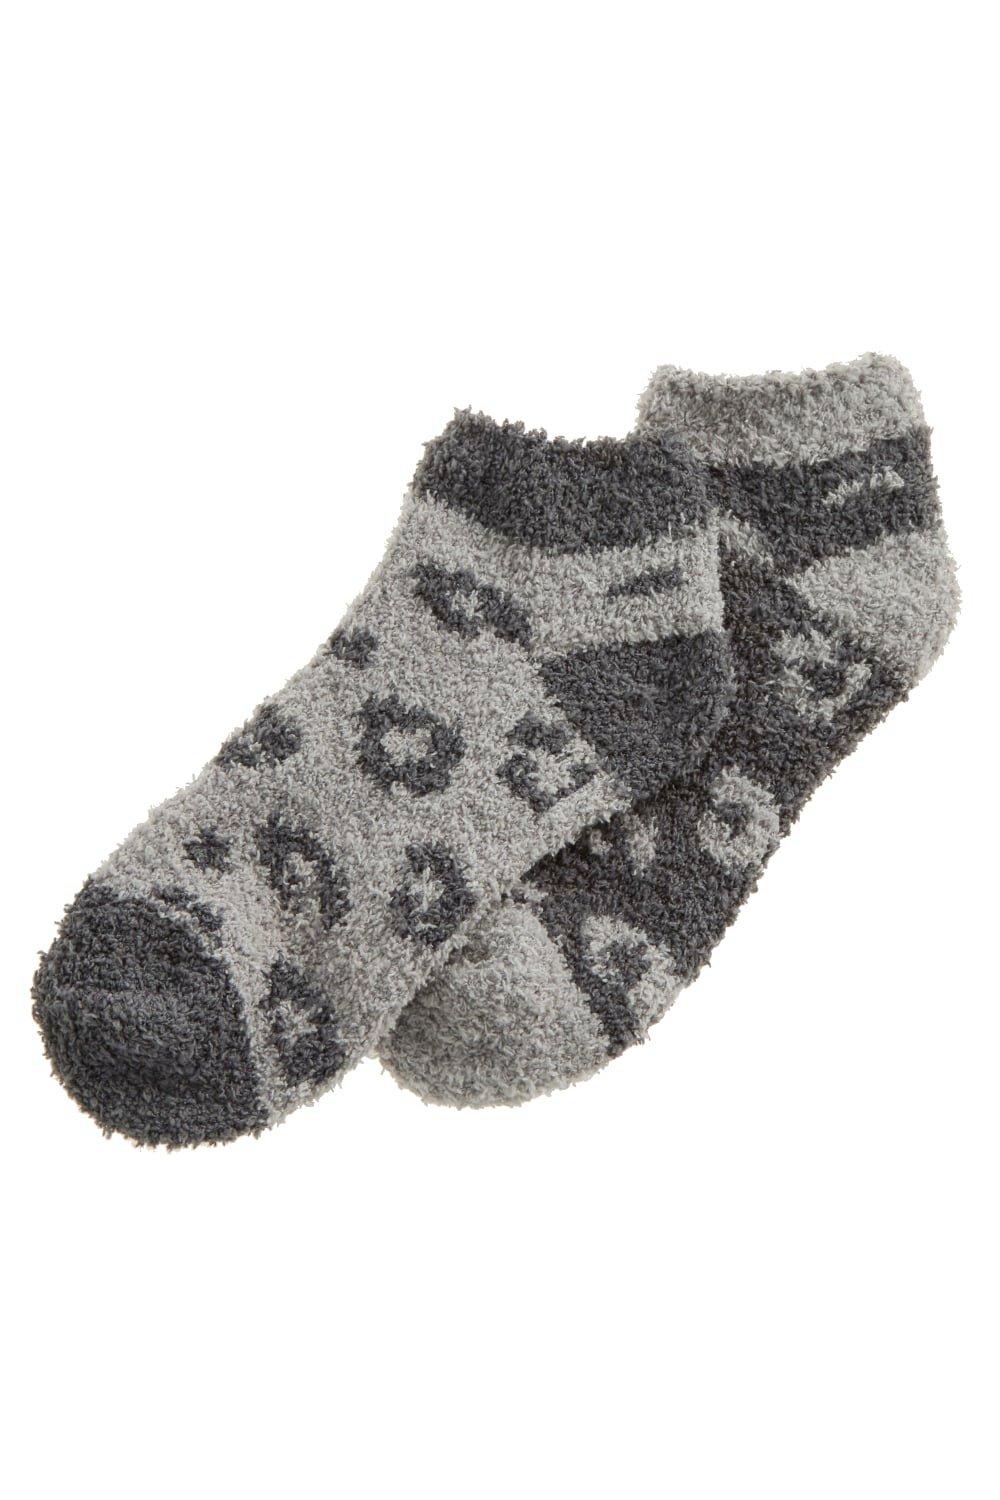 Animal Ankle Socks (Pack Of 2)